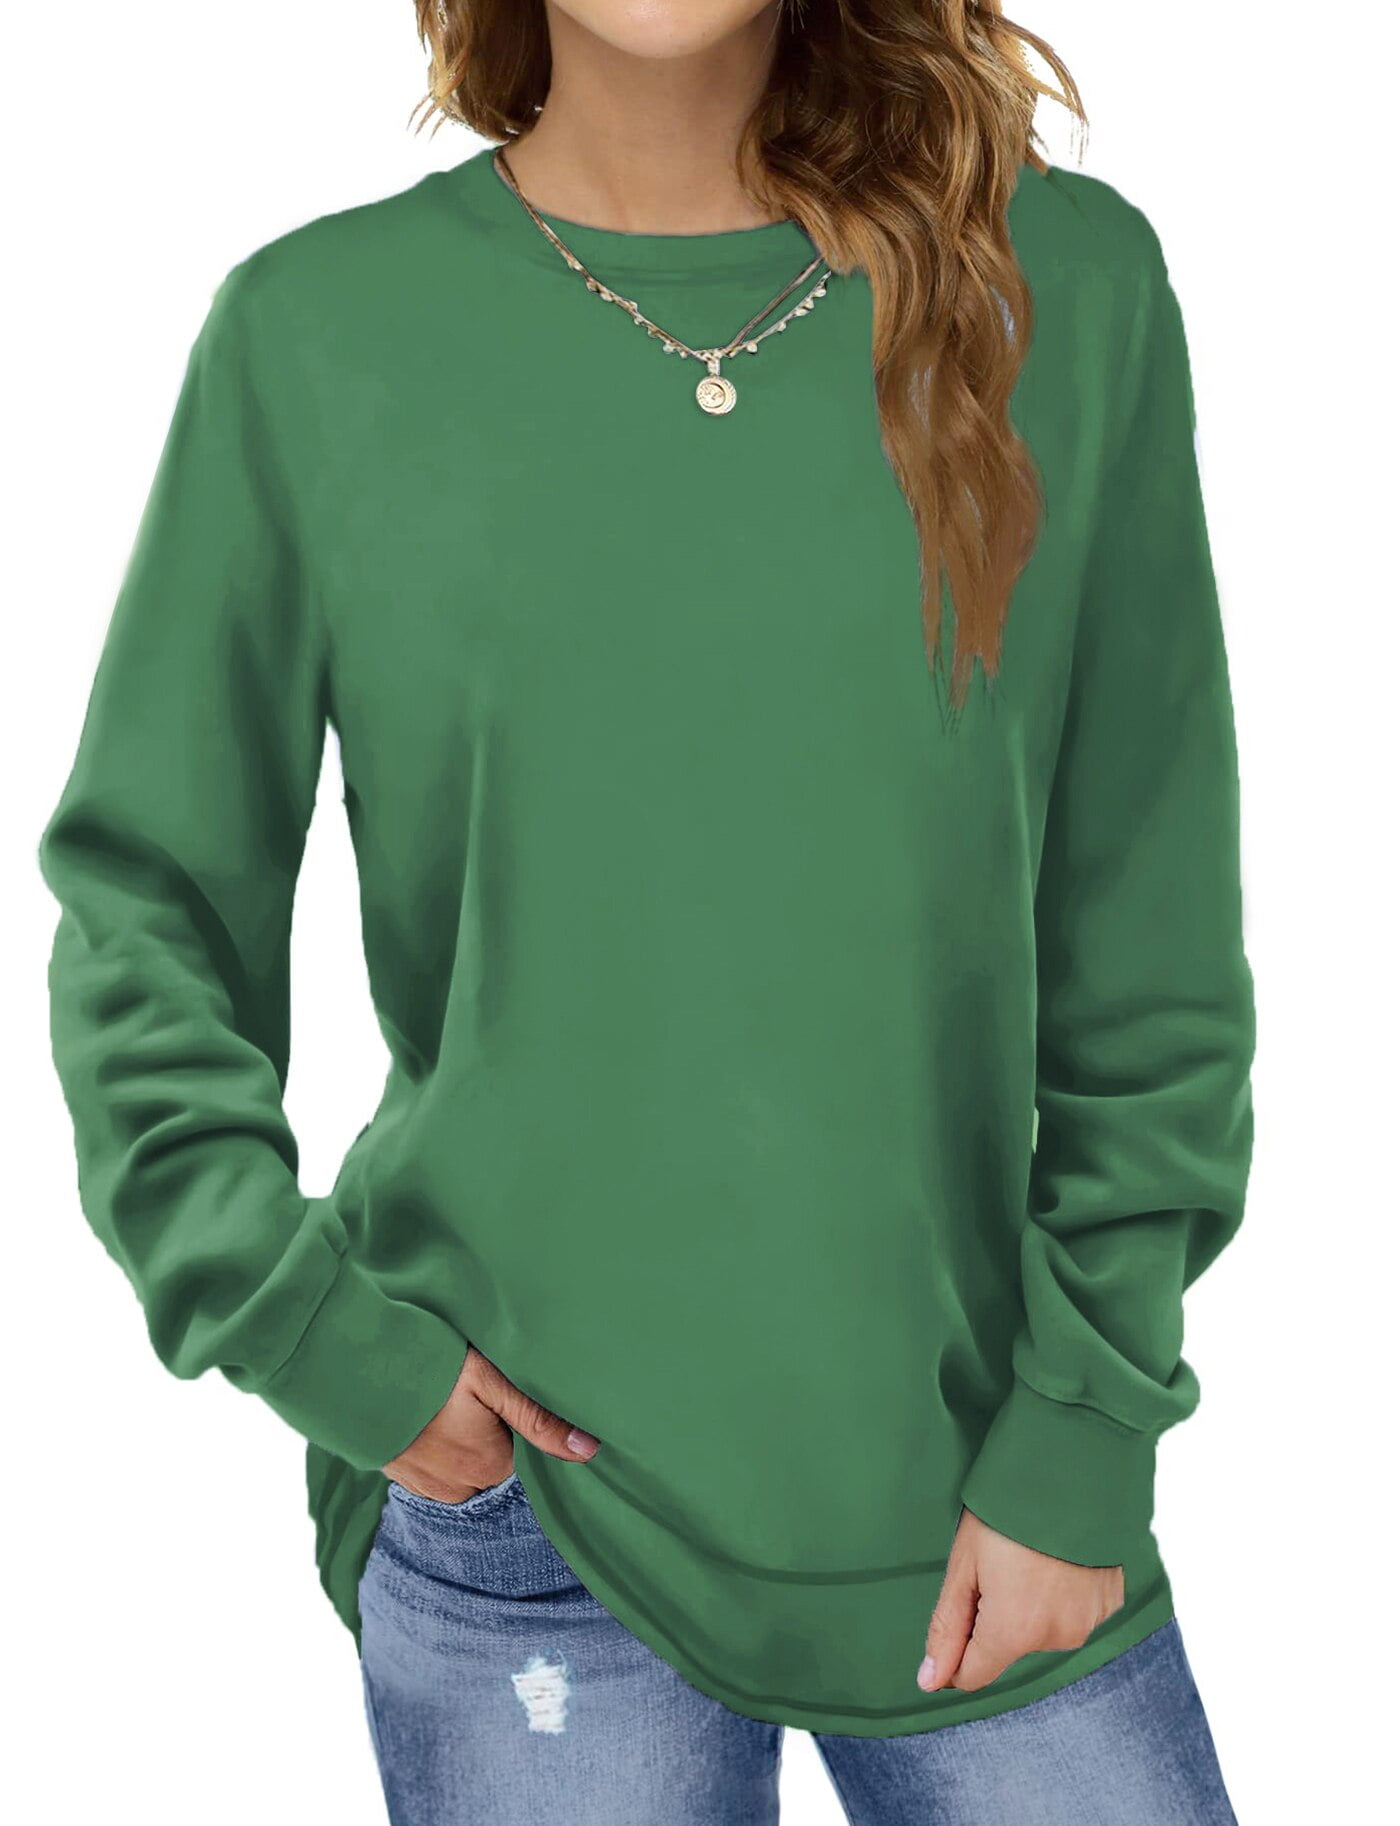 Fantaslook Sweatshirts for Women Crewneck Casual Long Sleeve Shirts ...